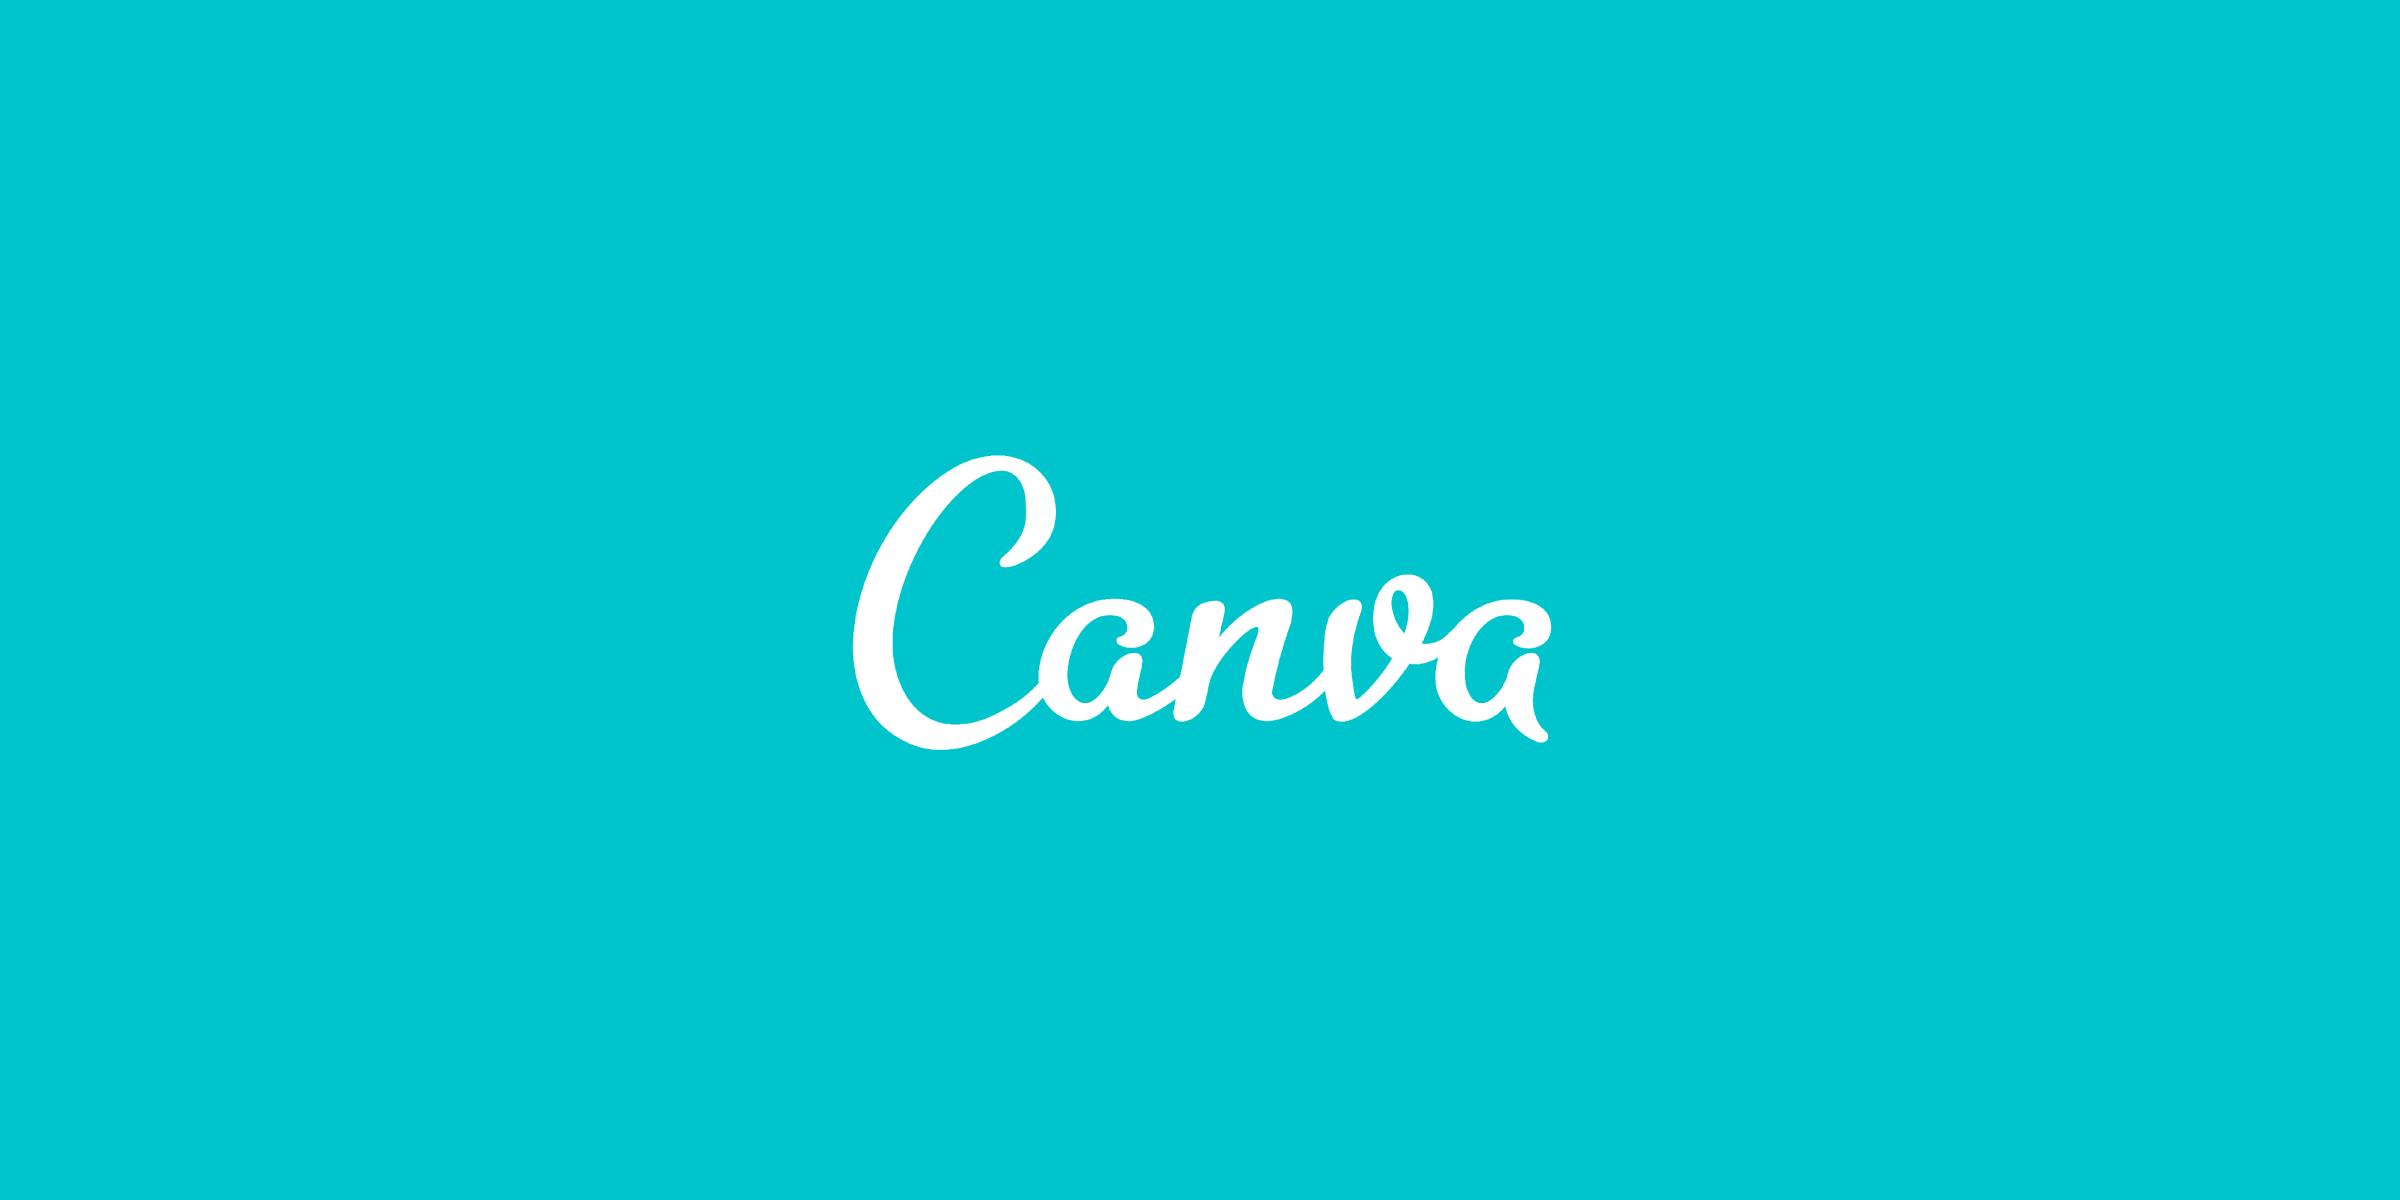 Report: Canva Business Breakdown & Founding Story